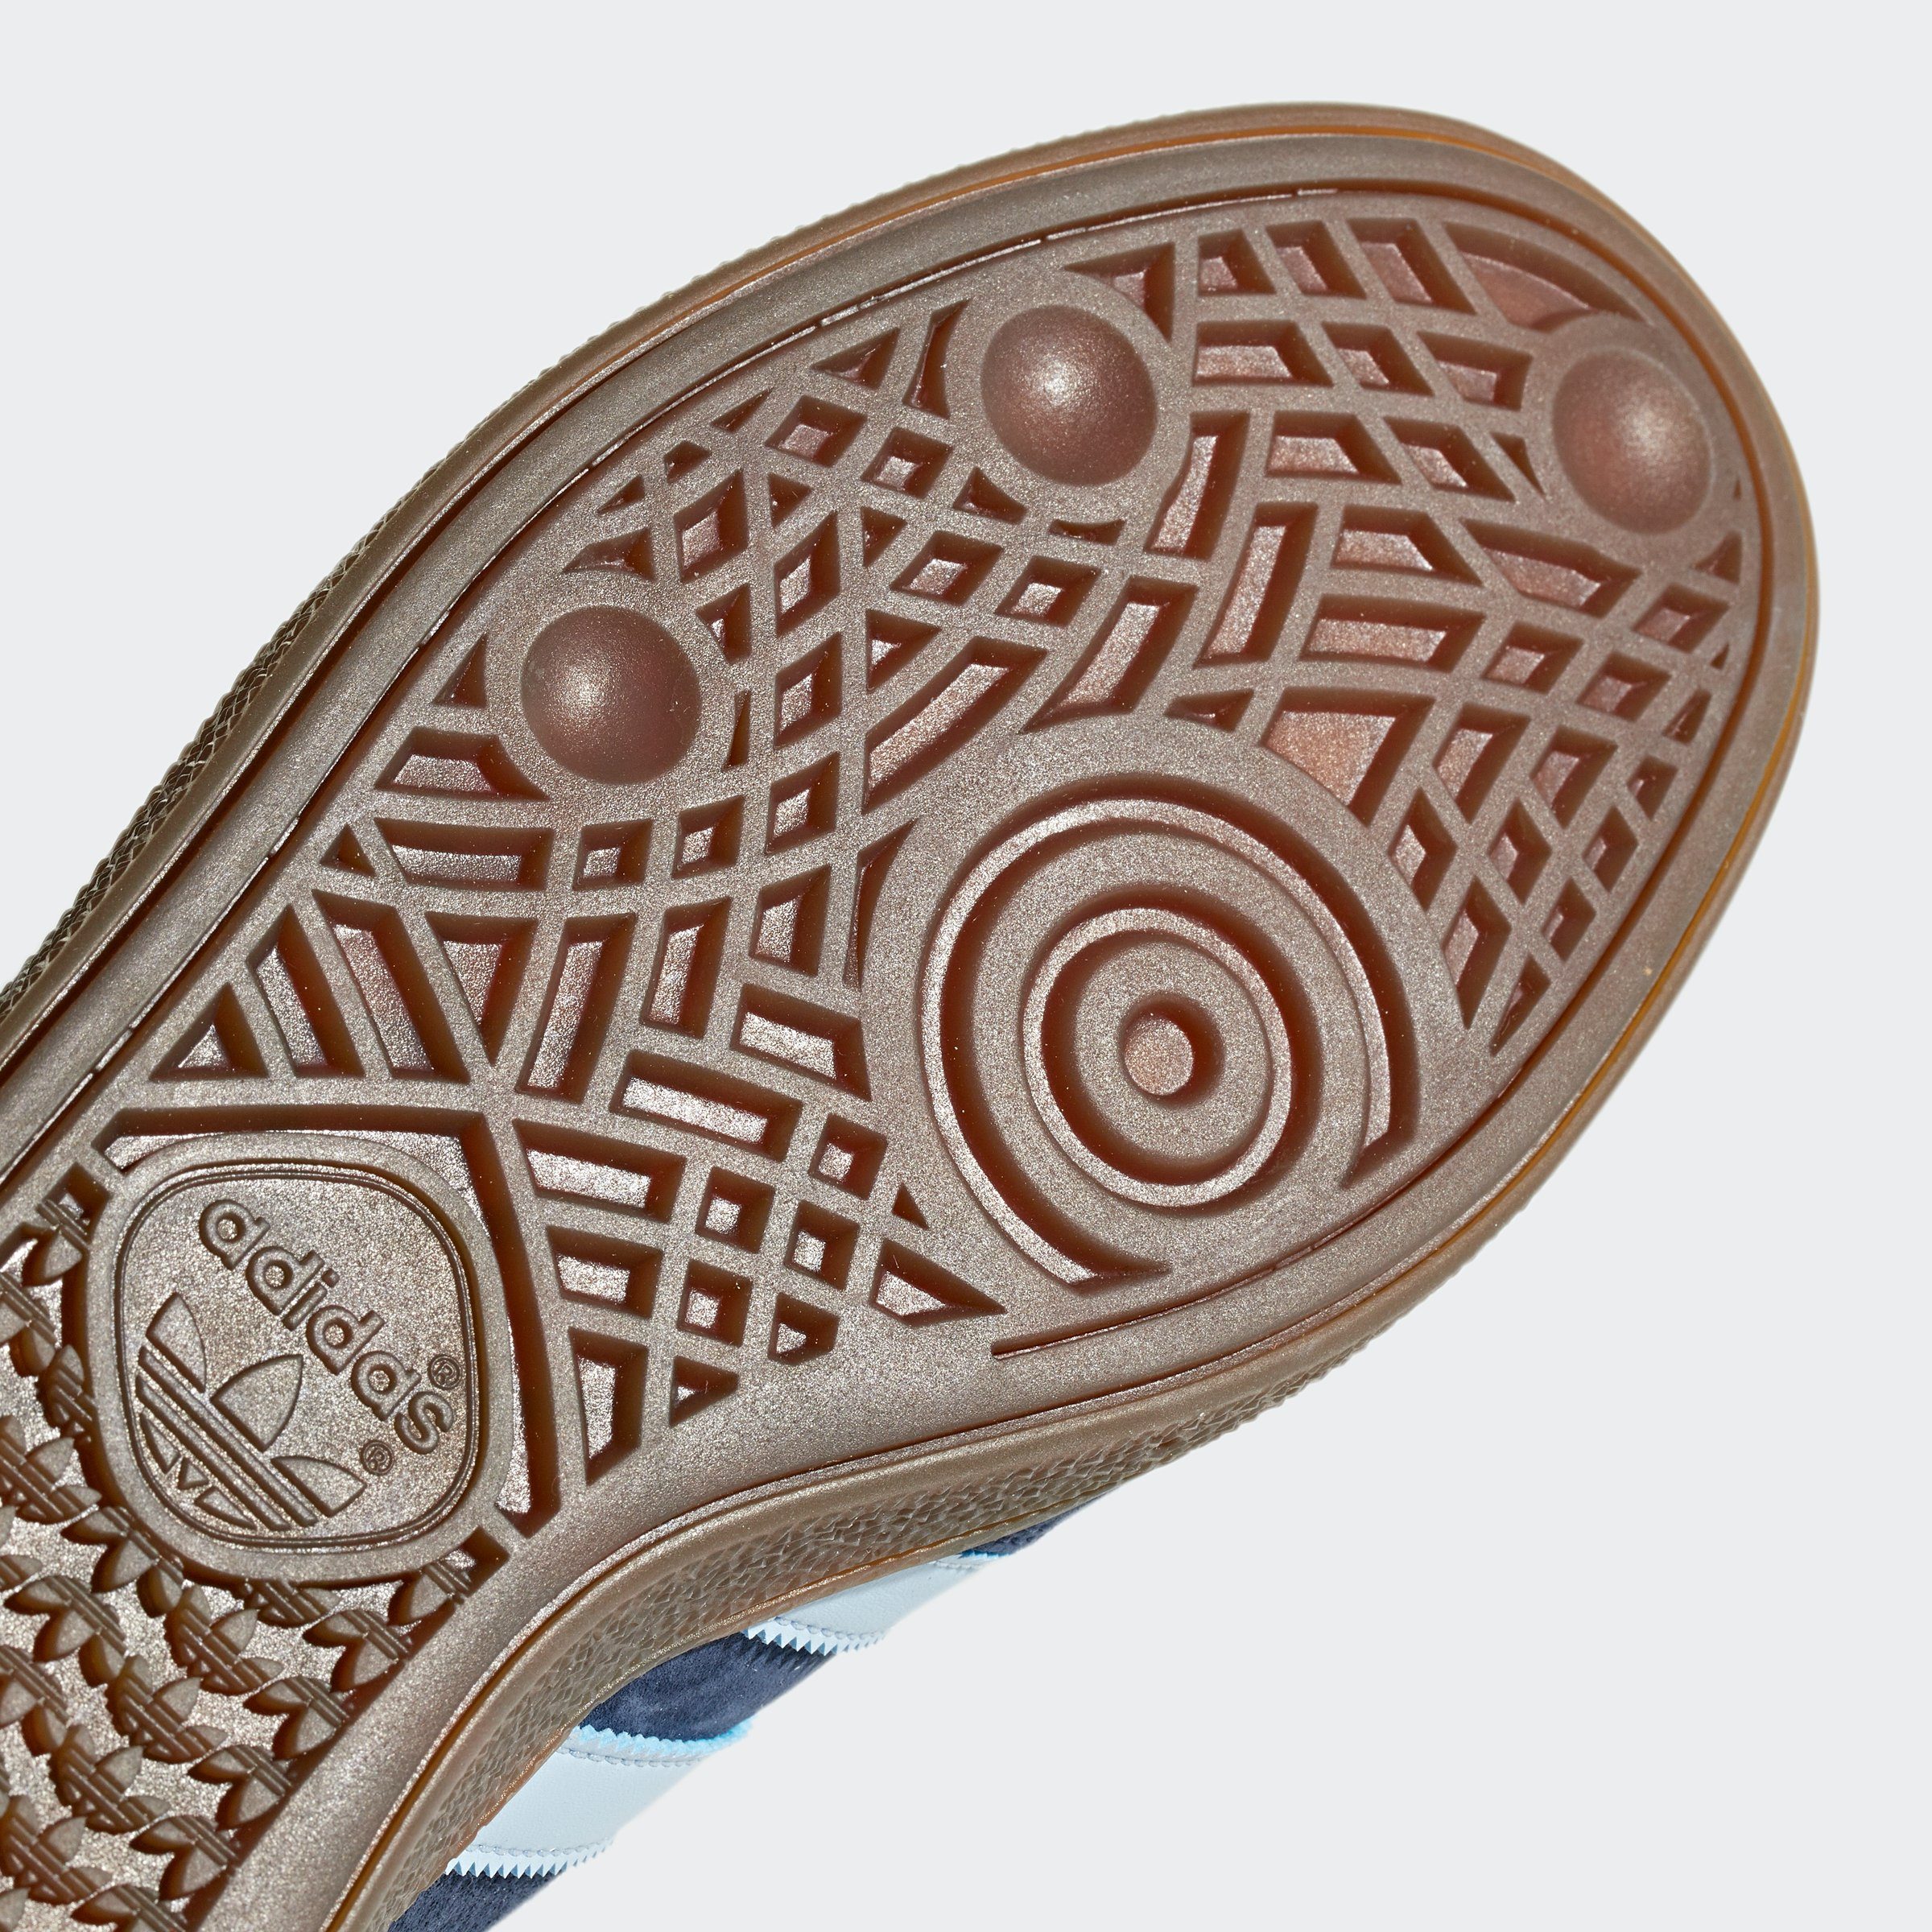 adidas Originals HANDBALL SPEZIAL Sneaker Clear / / Collegiate Gum5 Navy Sky